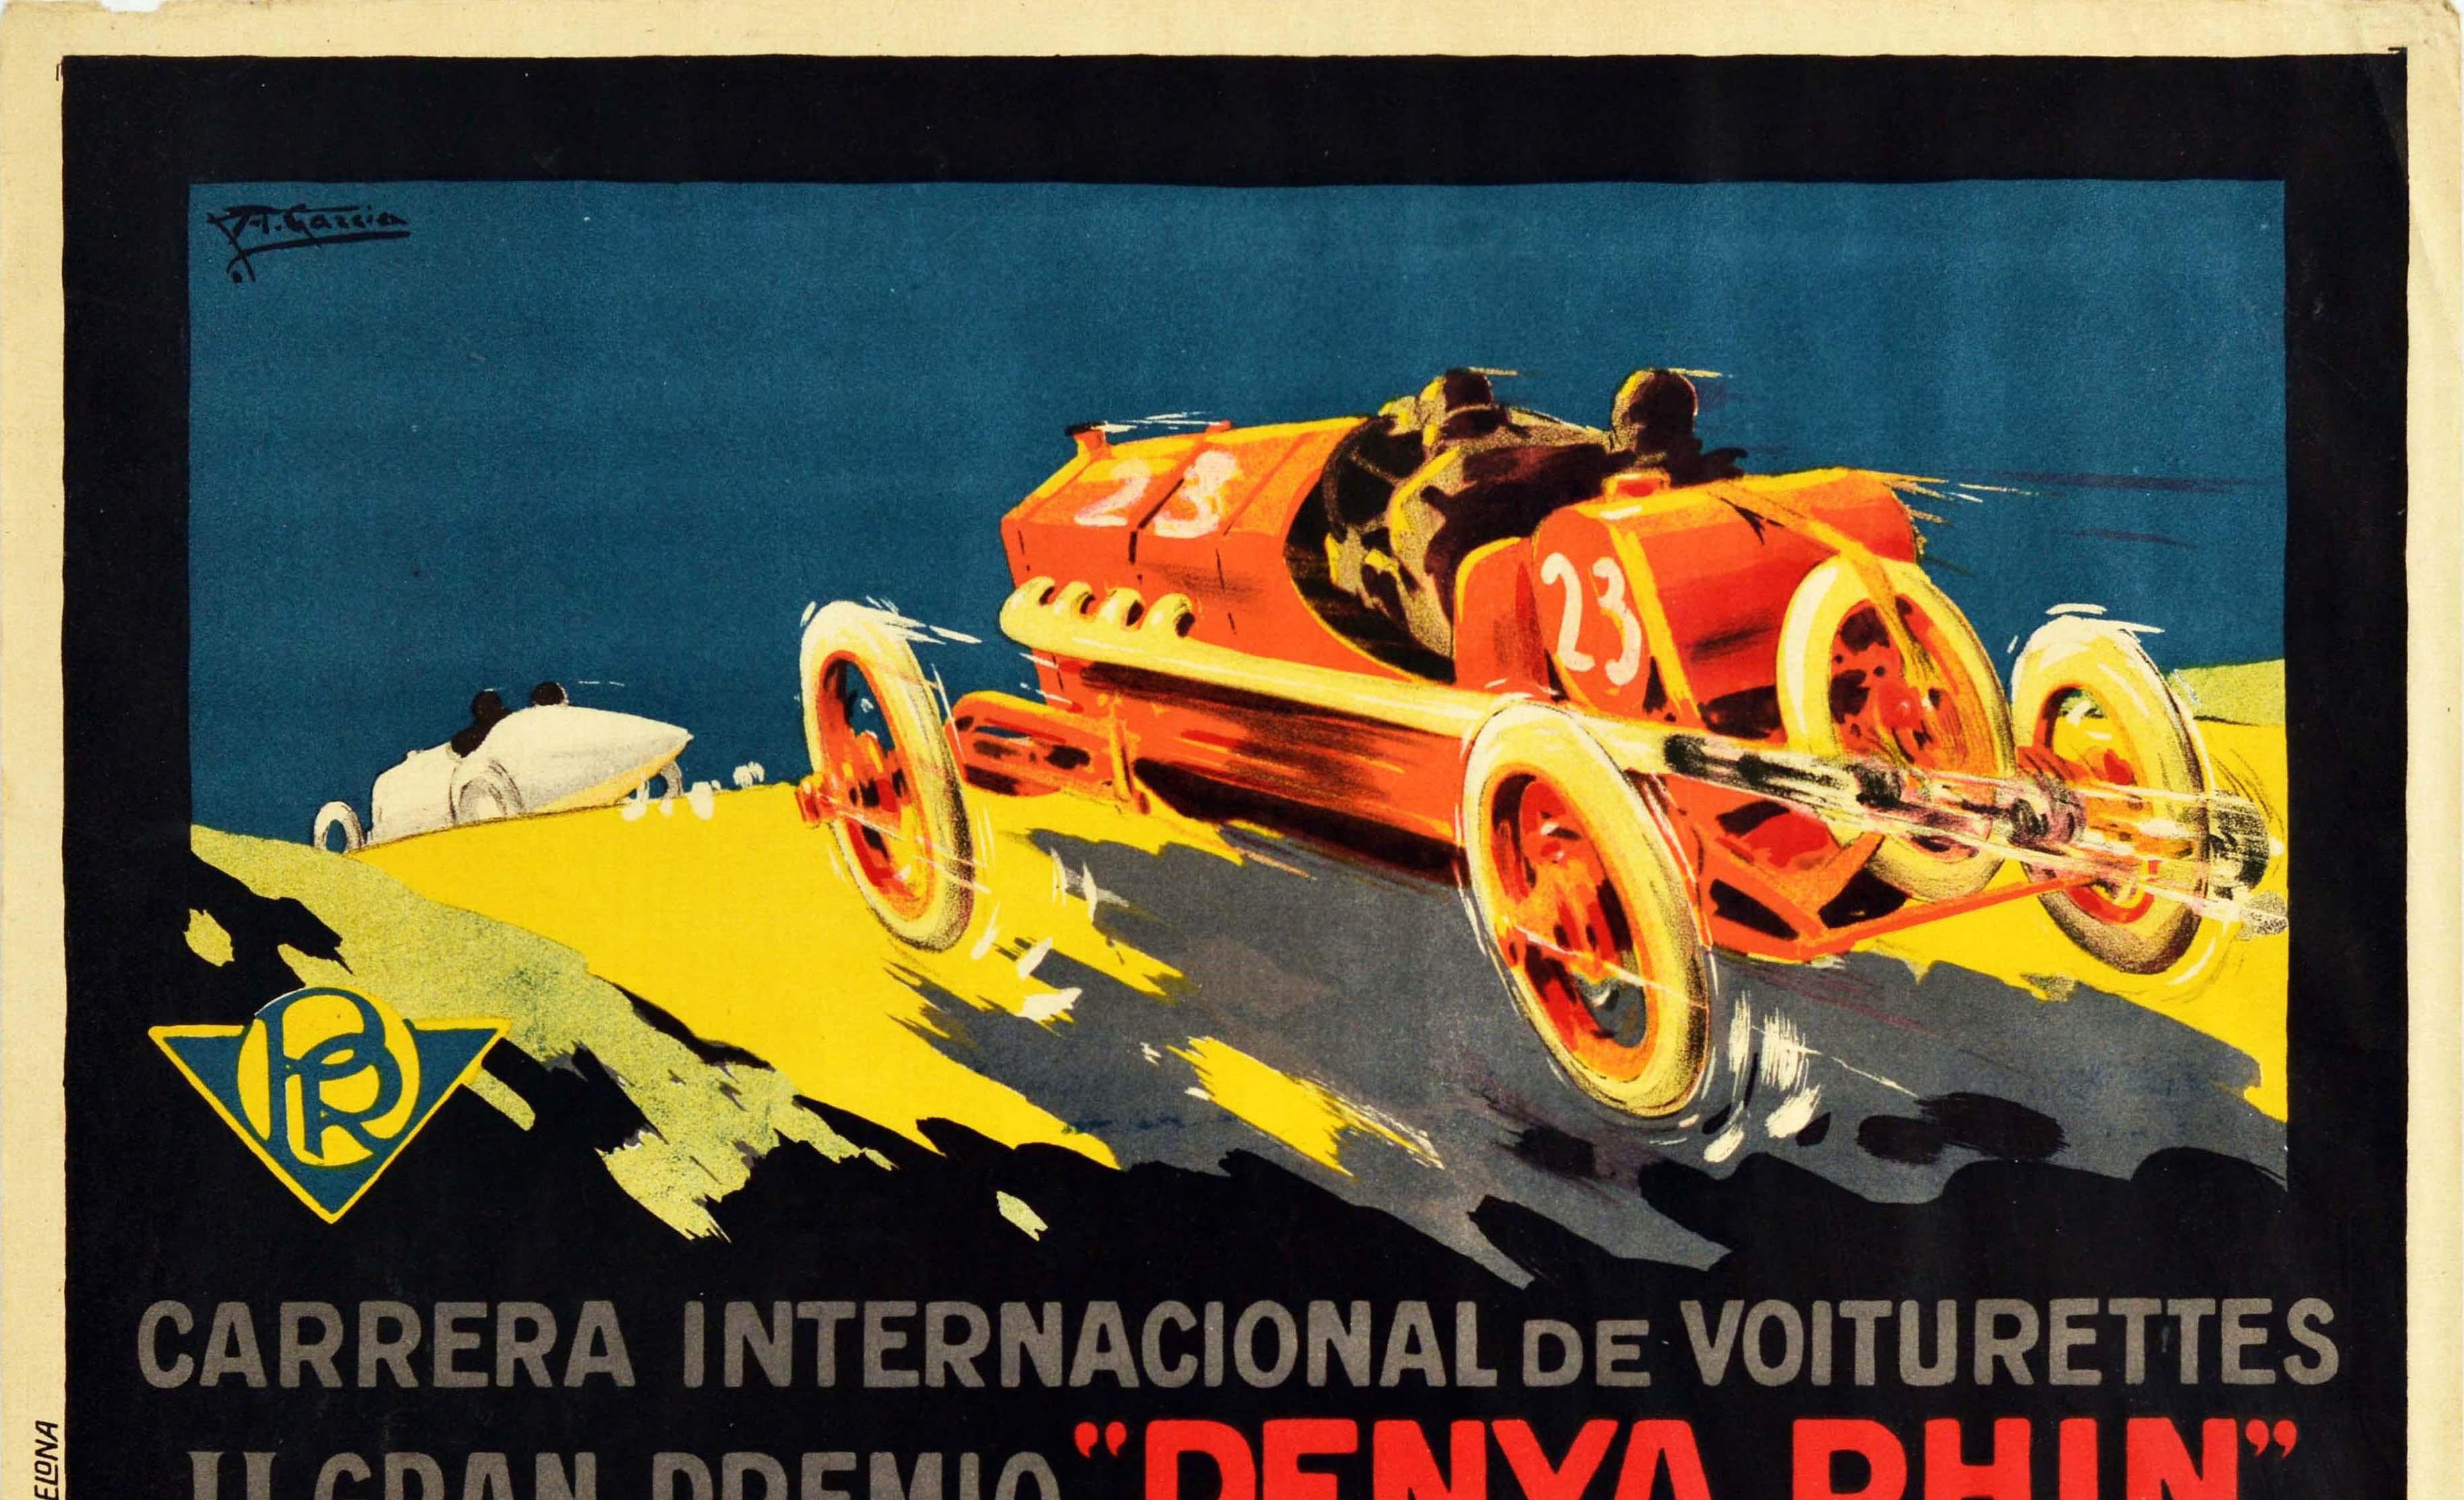 Original vintage motor car sport poster advertising the II Gran Premio Penya Rhin Grand Prix auto racing event on the Circuito Villafranca del Panades circuit on 29 October 1922 organised by the Carrera Internacional de Voiturettes featuring a